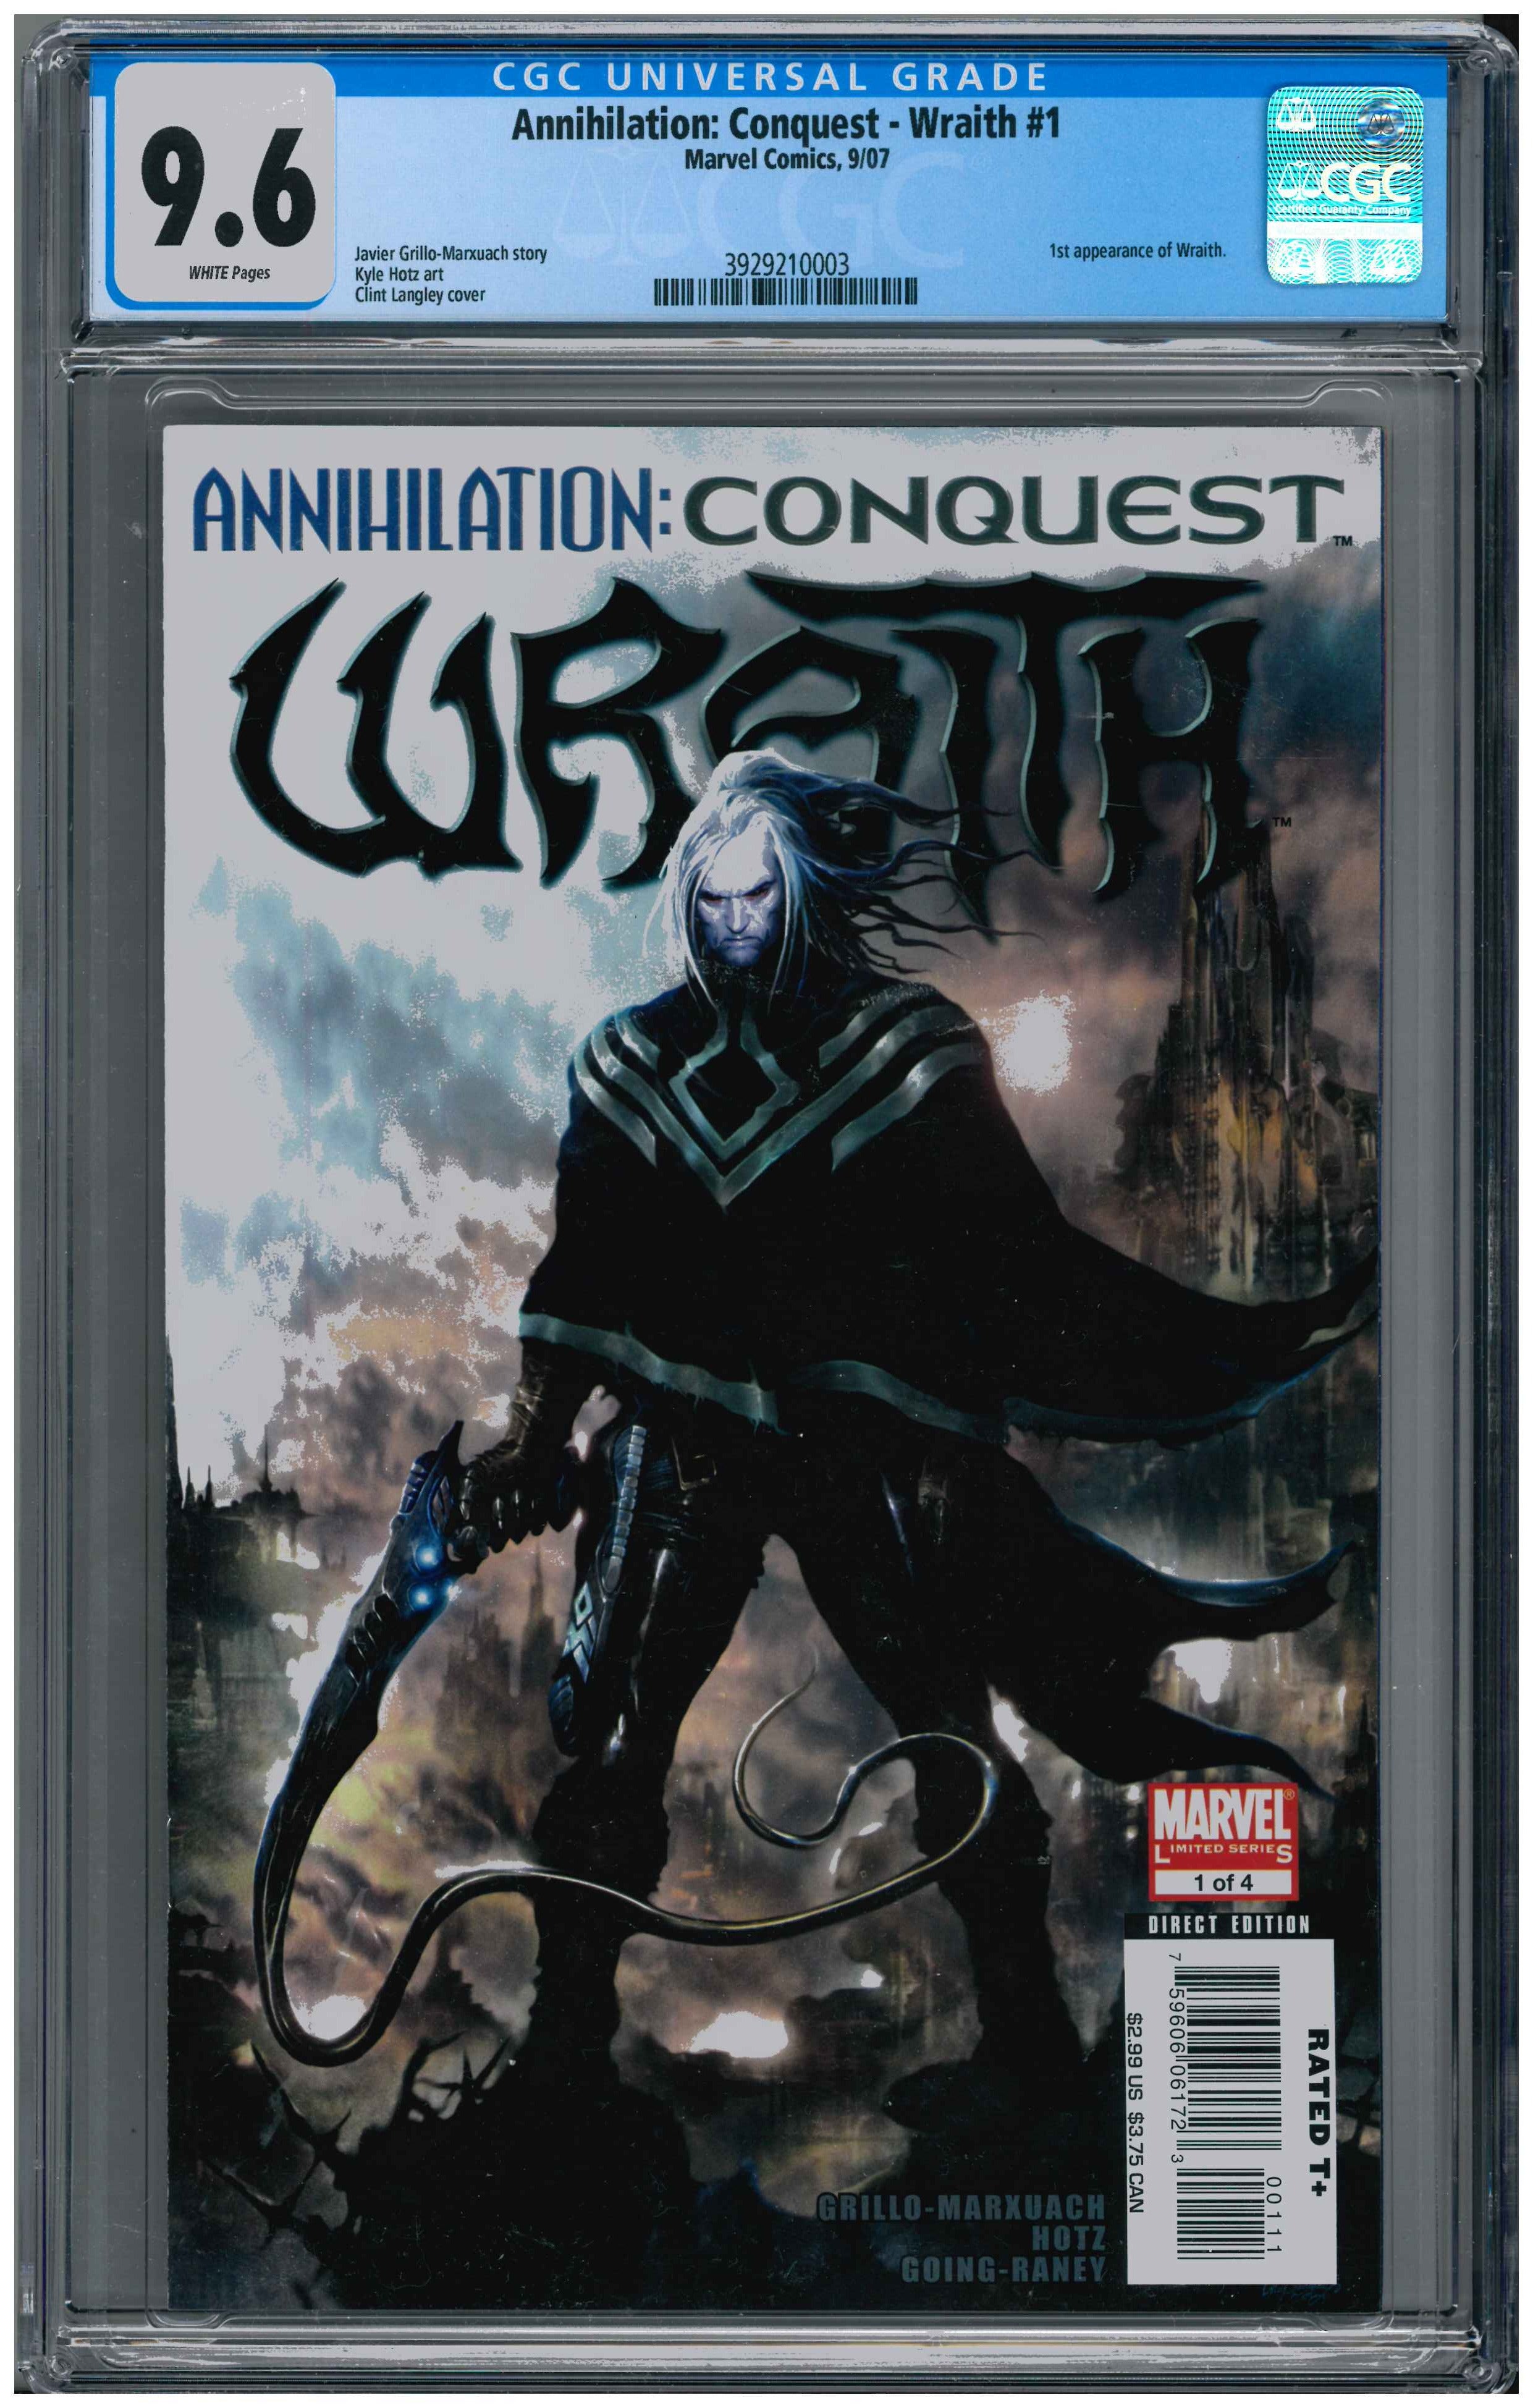 Annihilation: Conquest - Wraith #1